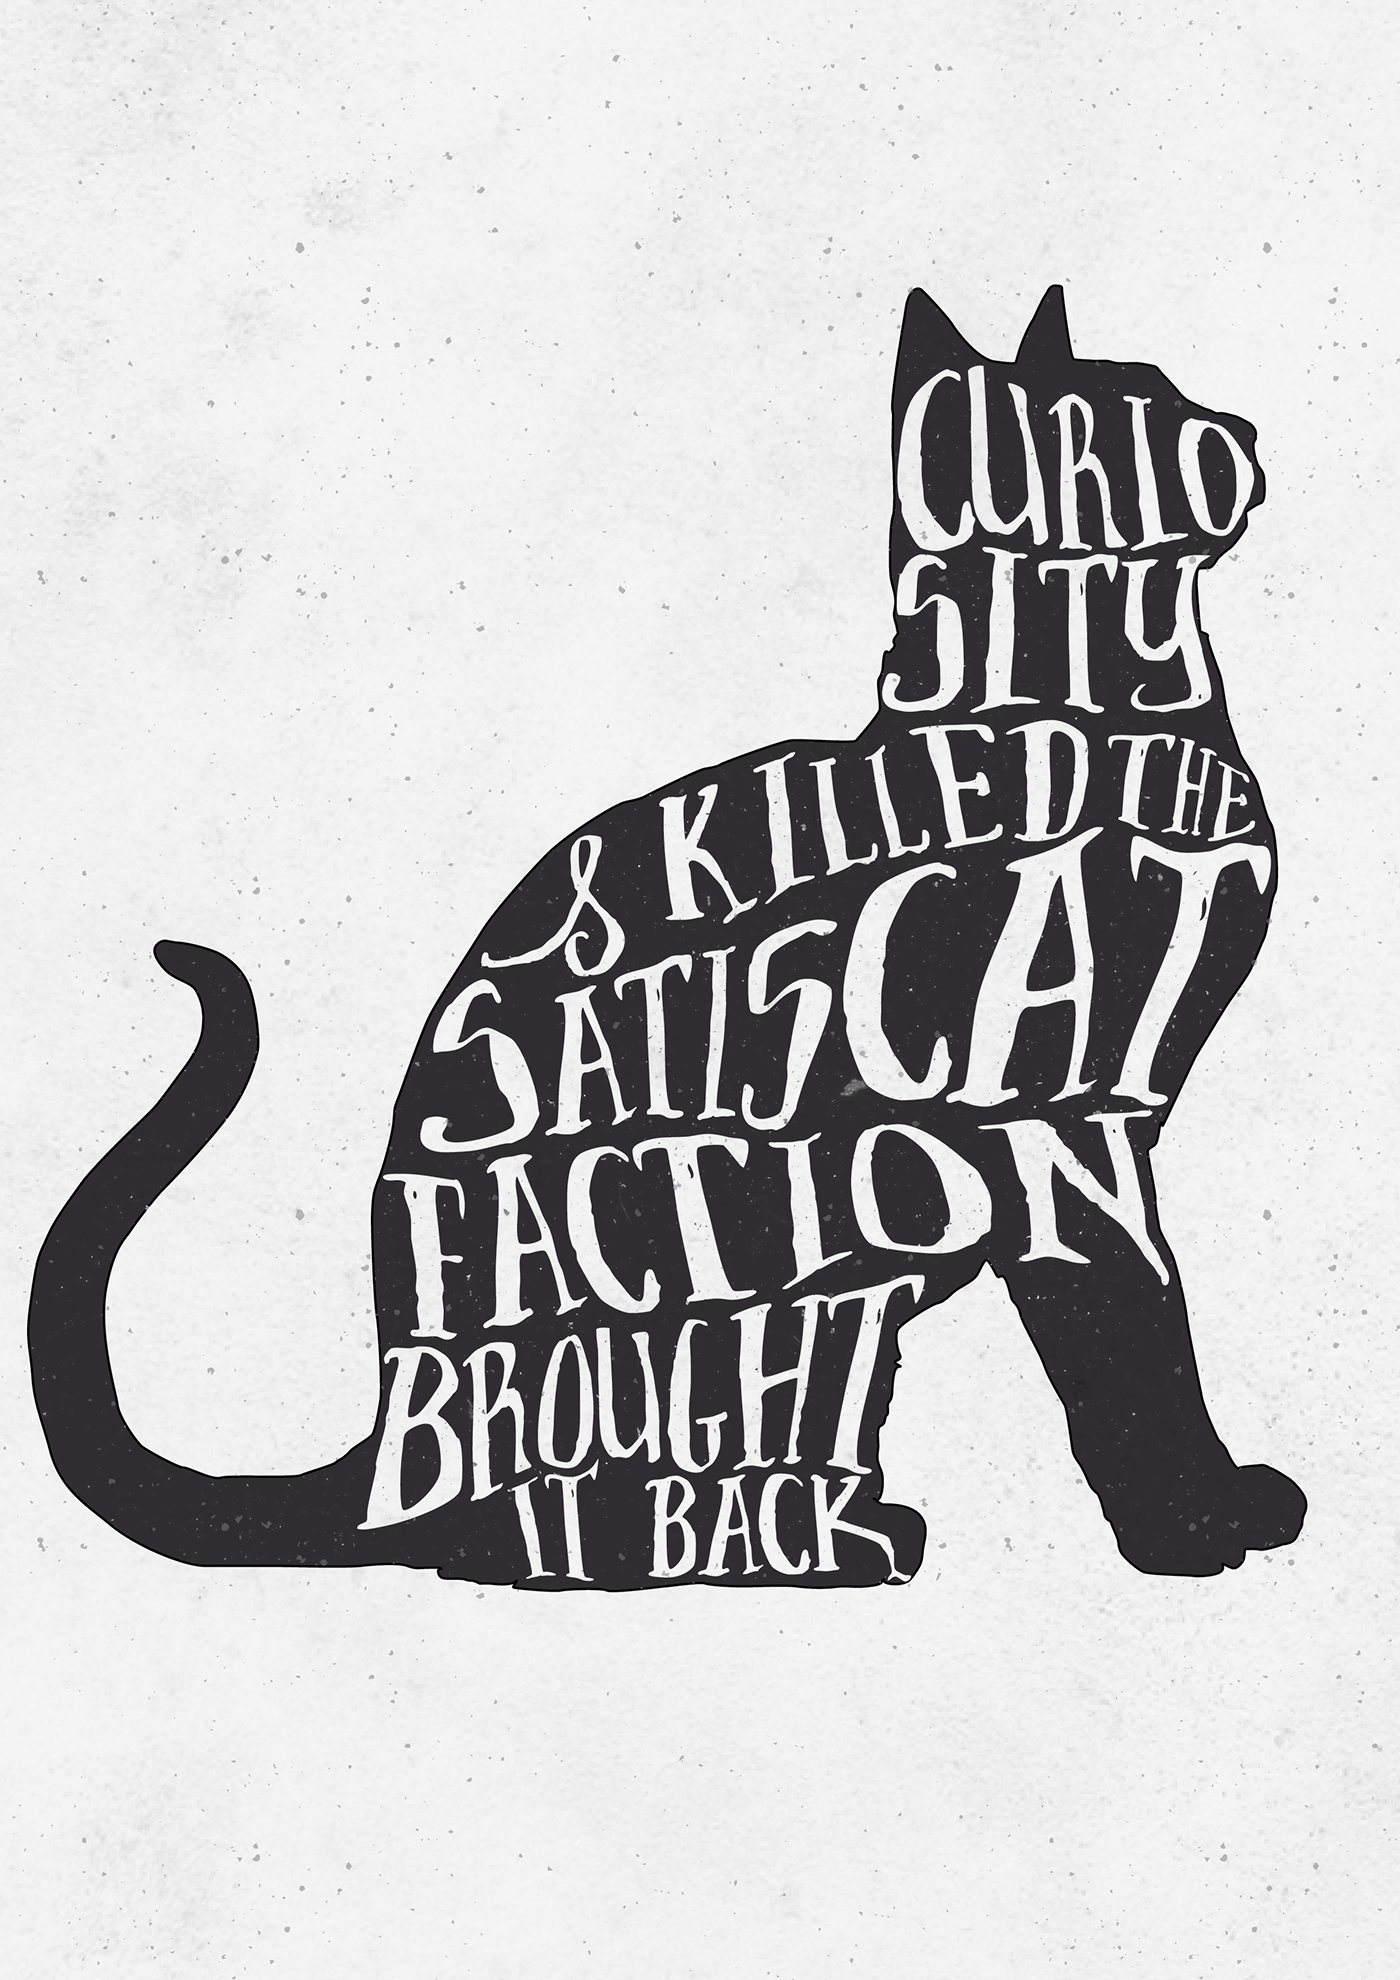 Curiosity killing the cat. Curiosity Killed the Cat. Kill the Cat Постер. Пословица Curiosity Killed a Cat.. Curiosity Killed the Cat русский эквивалент.